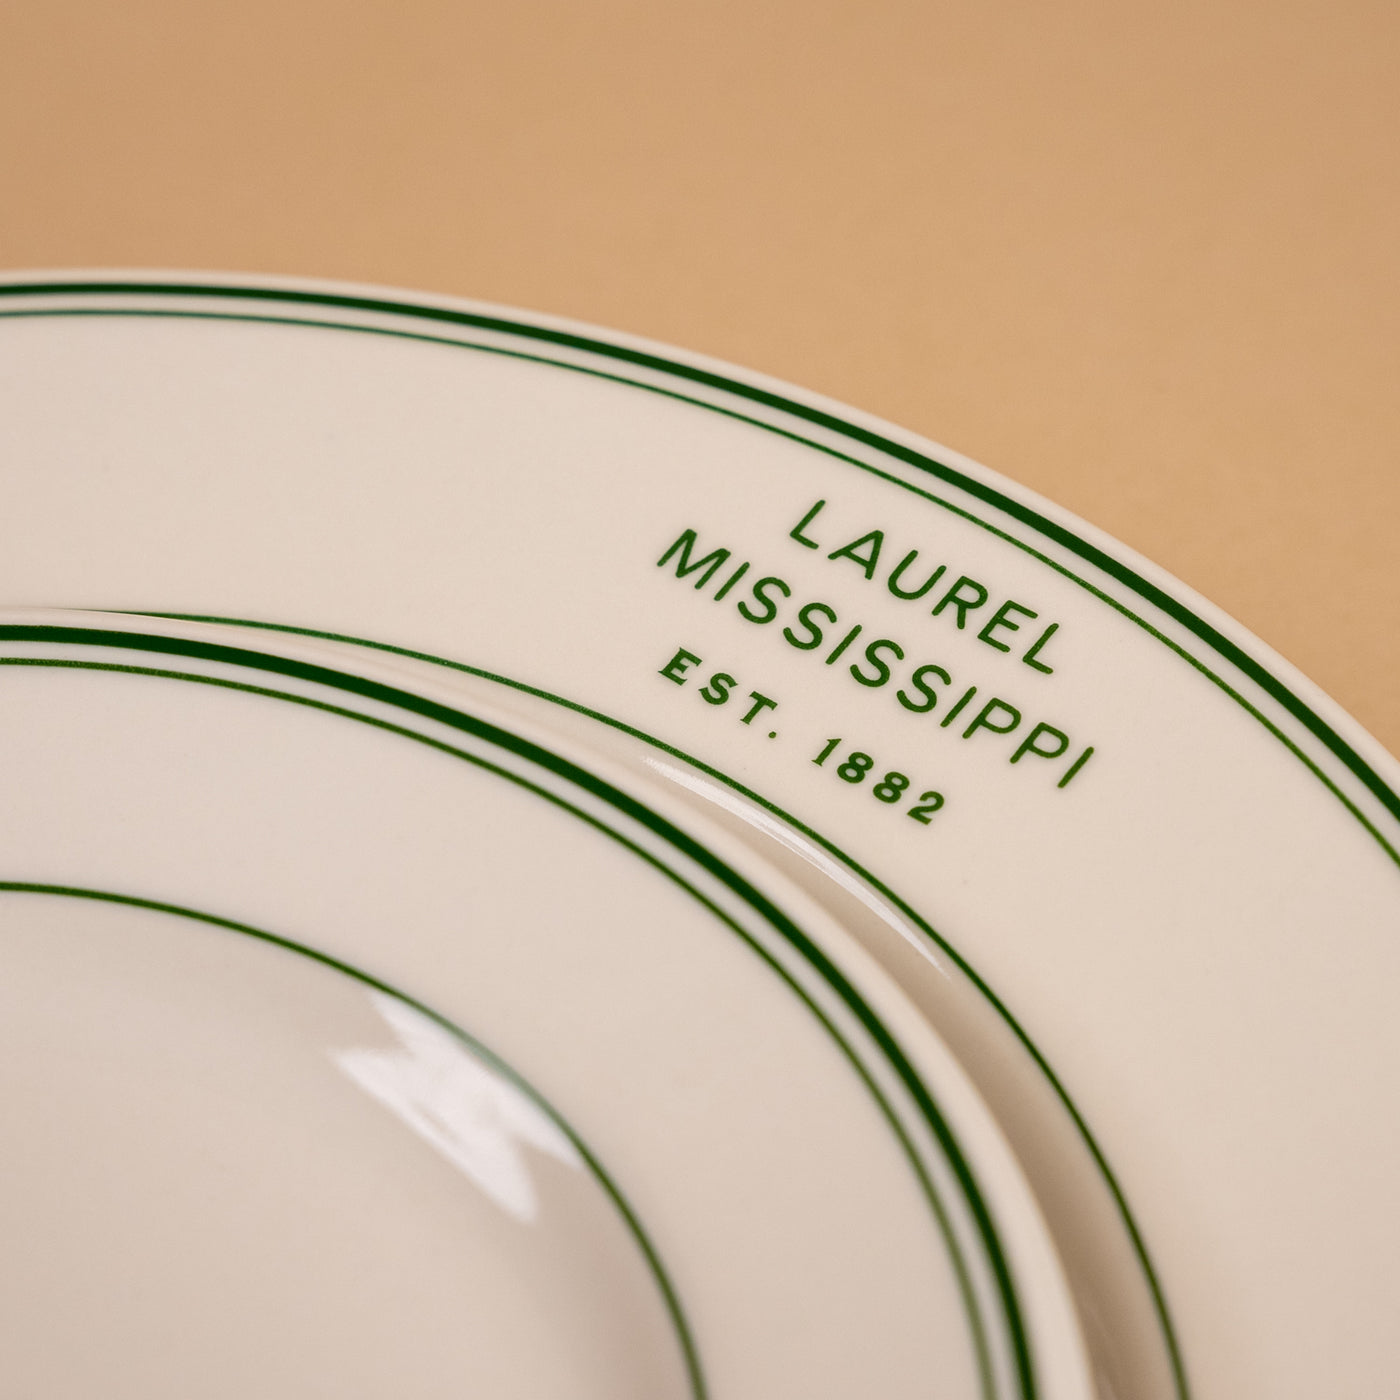 Laurel, Mississippi Dinner Plate